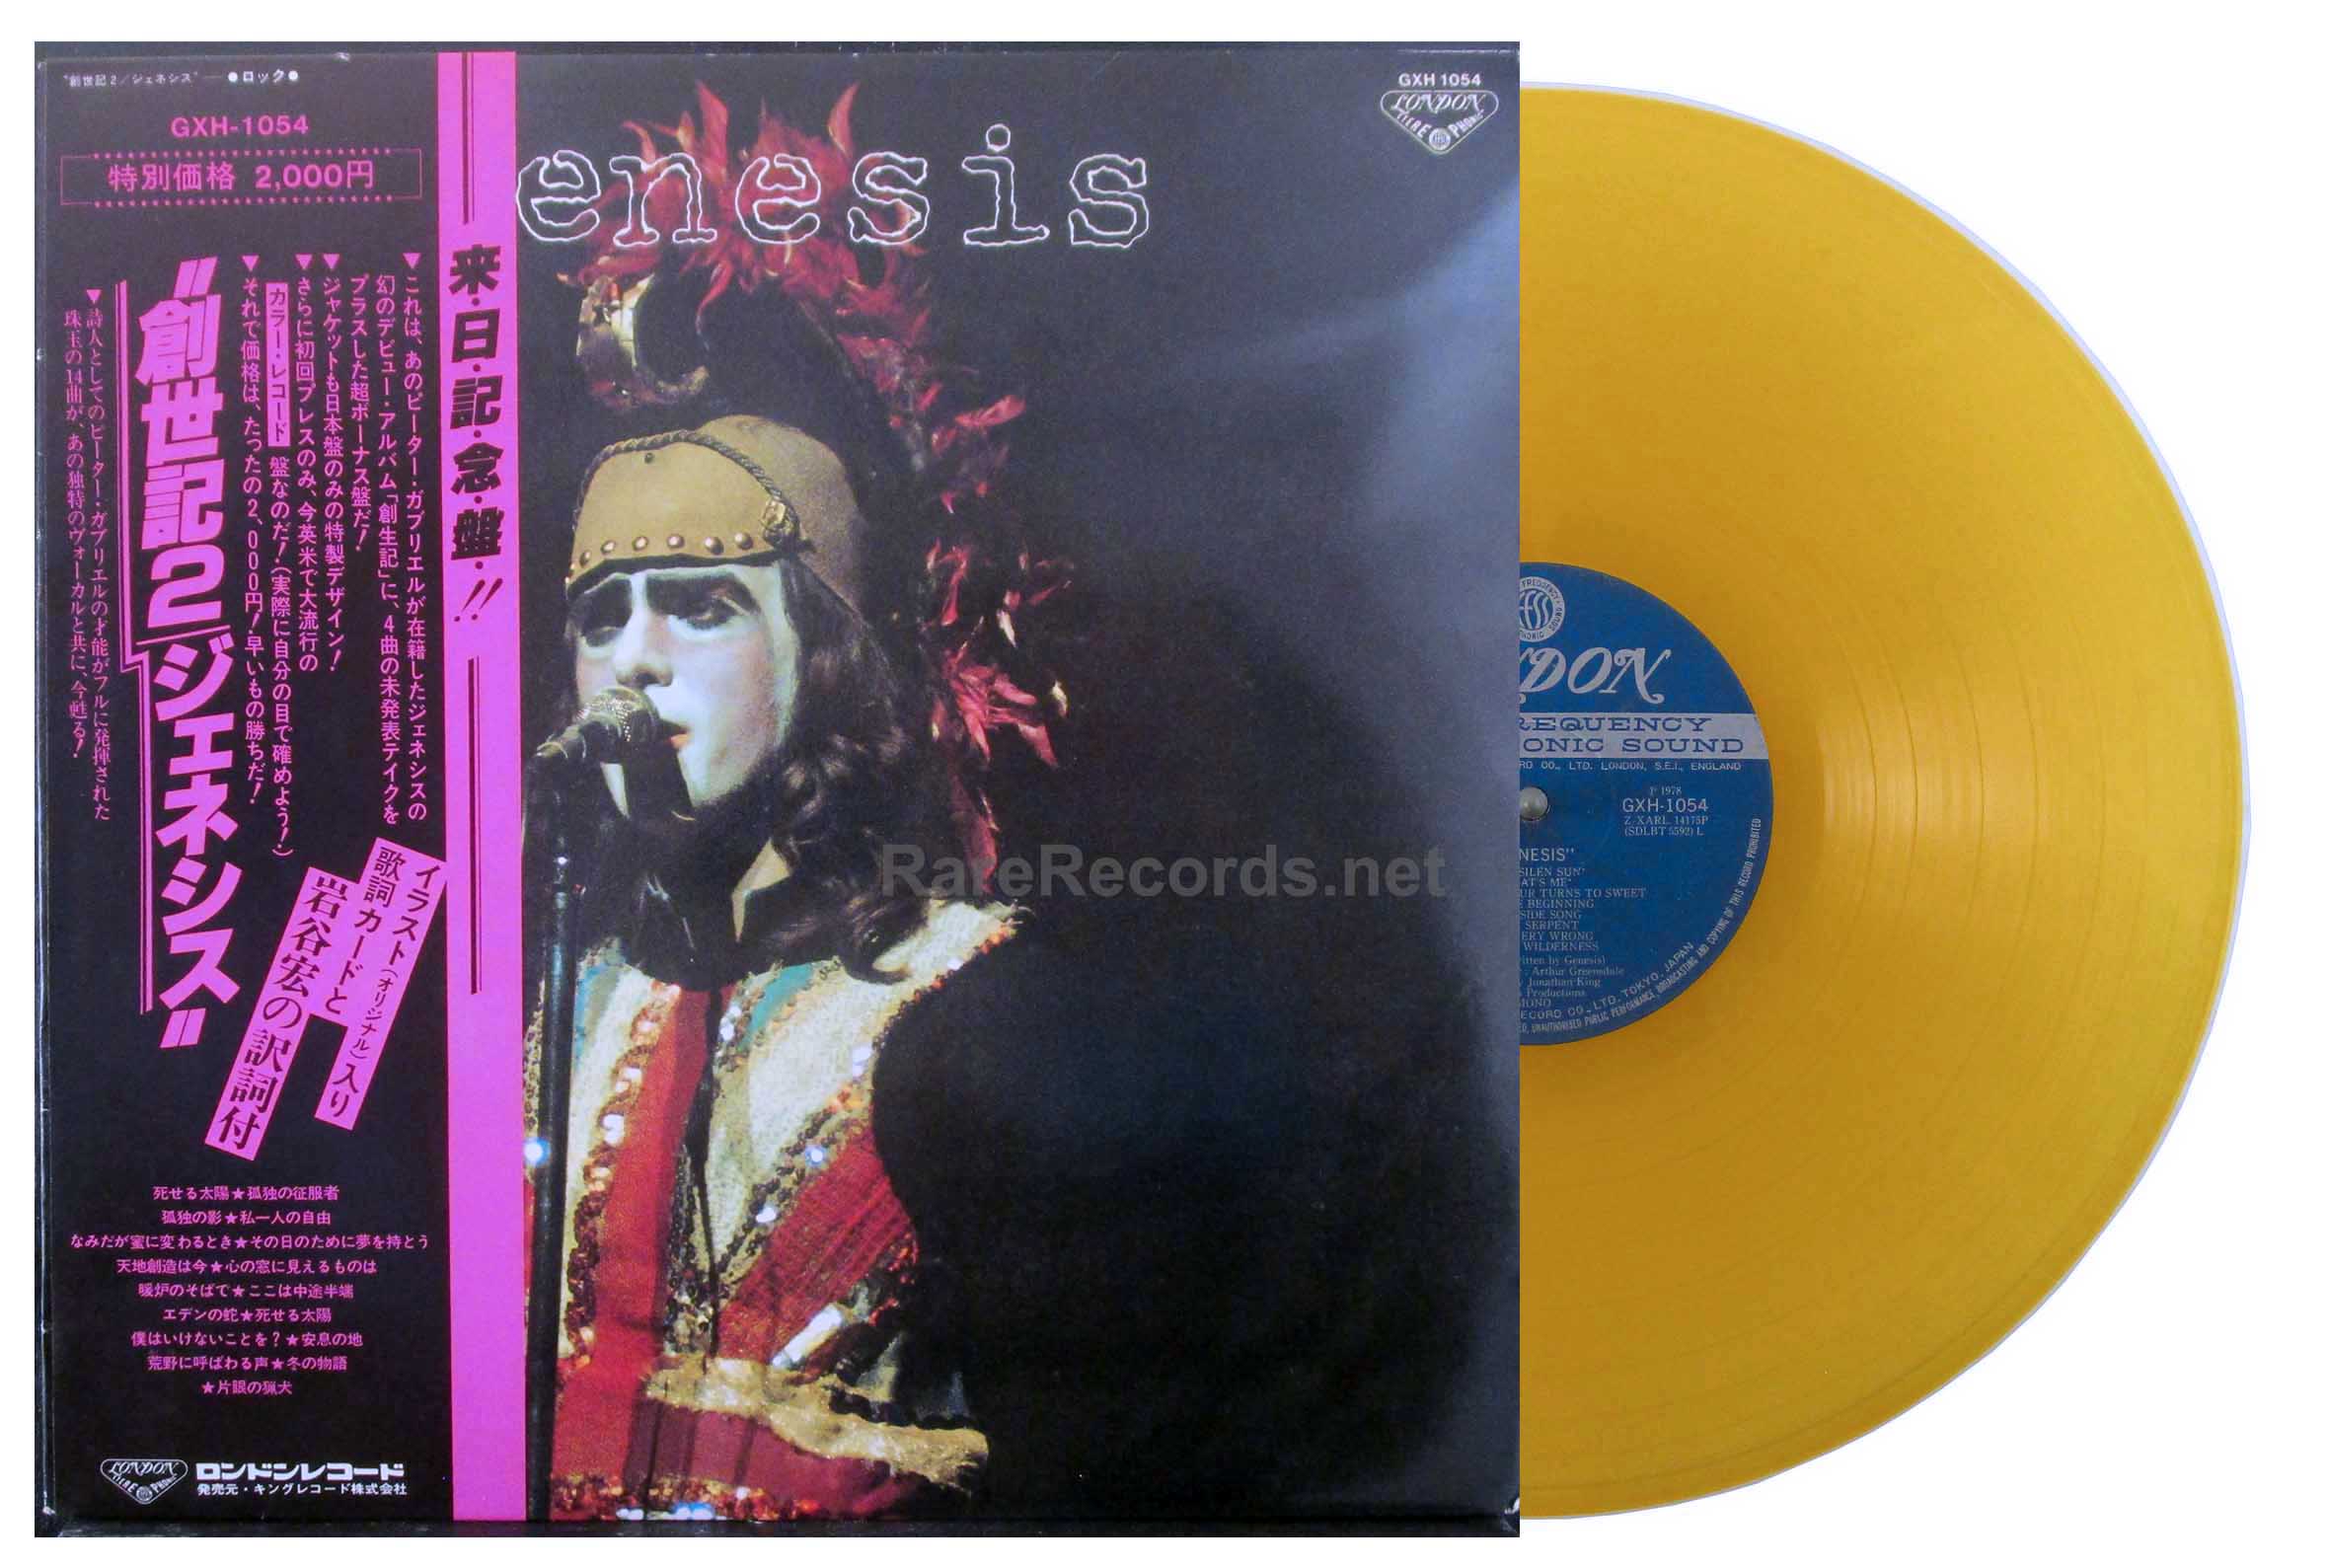 Genesis - Genesis limited edition yellow vinyl Japan LP with obi